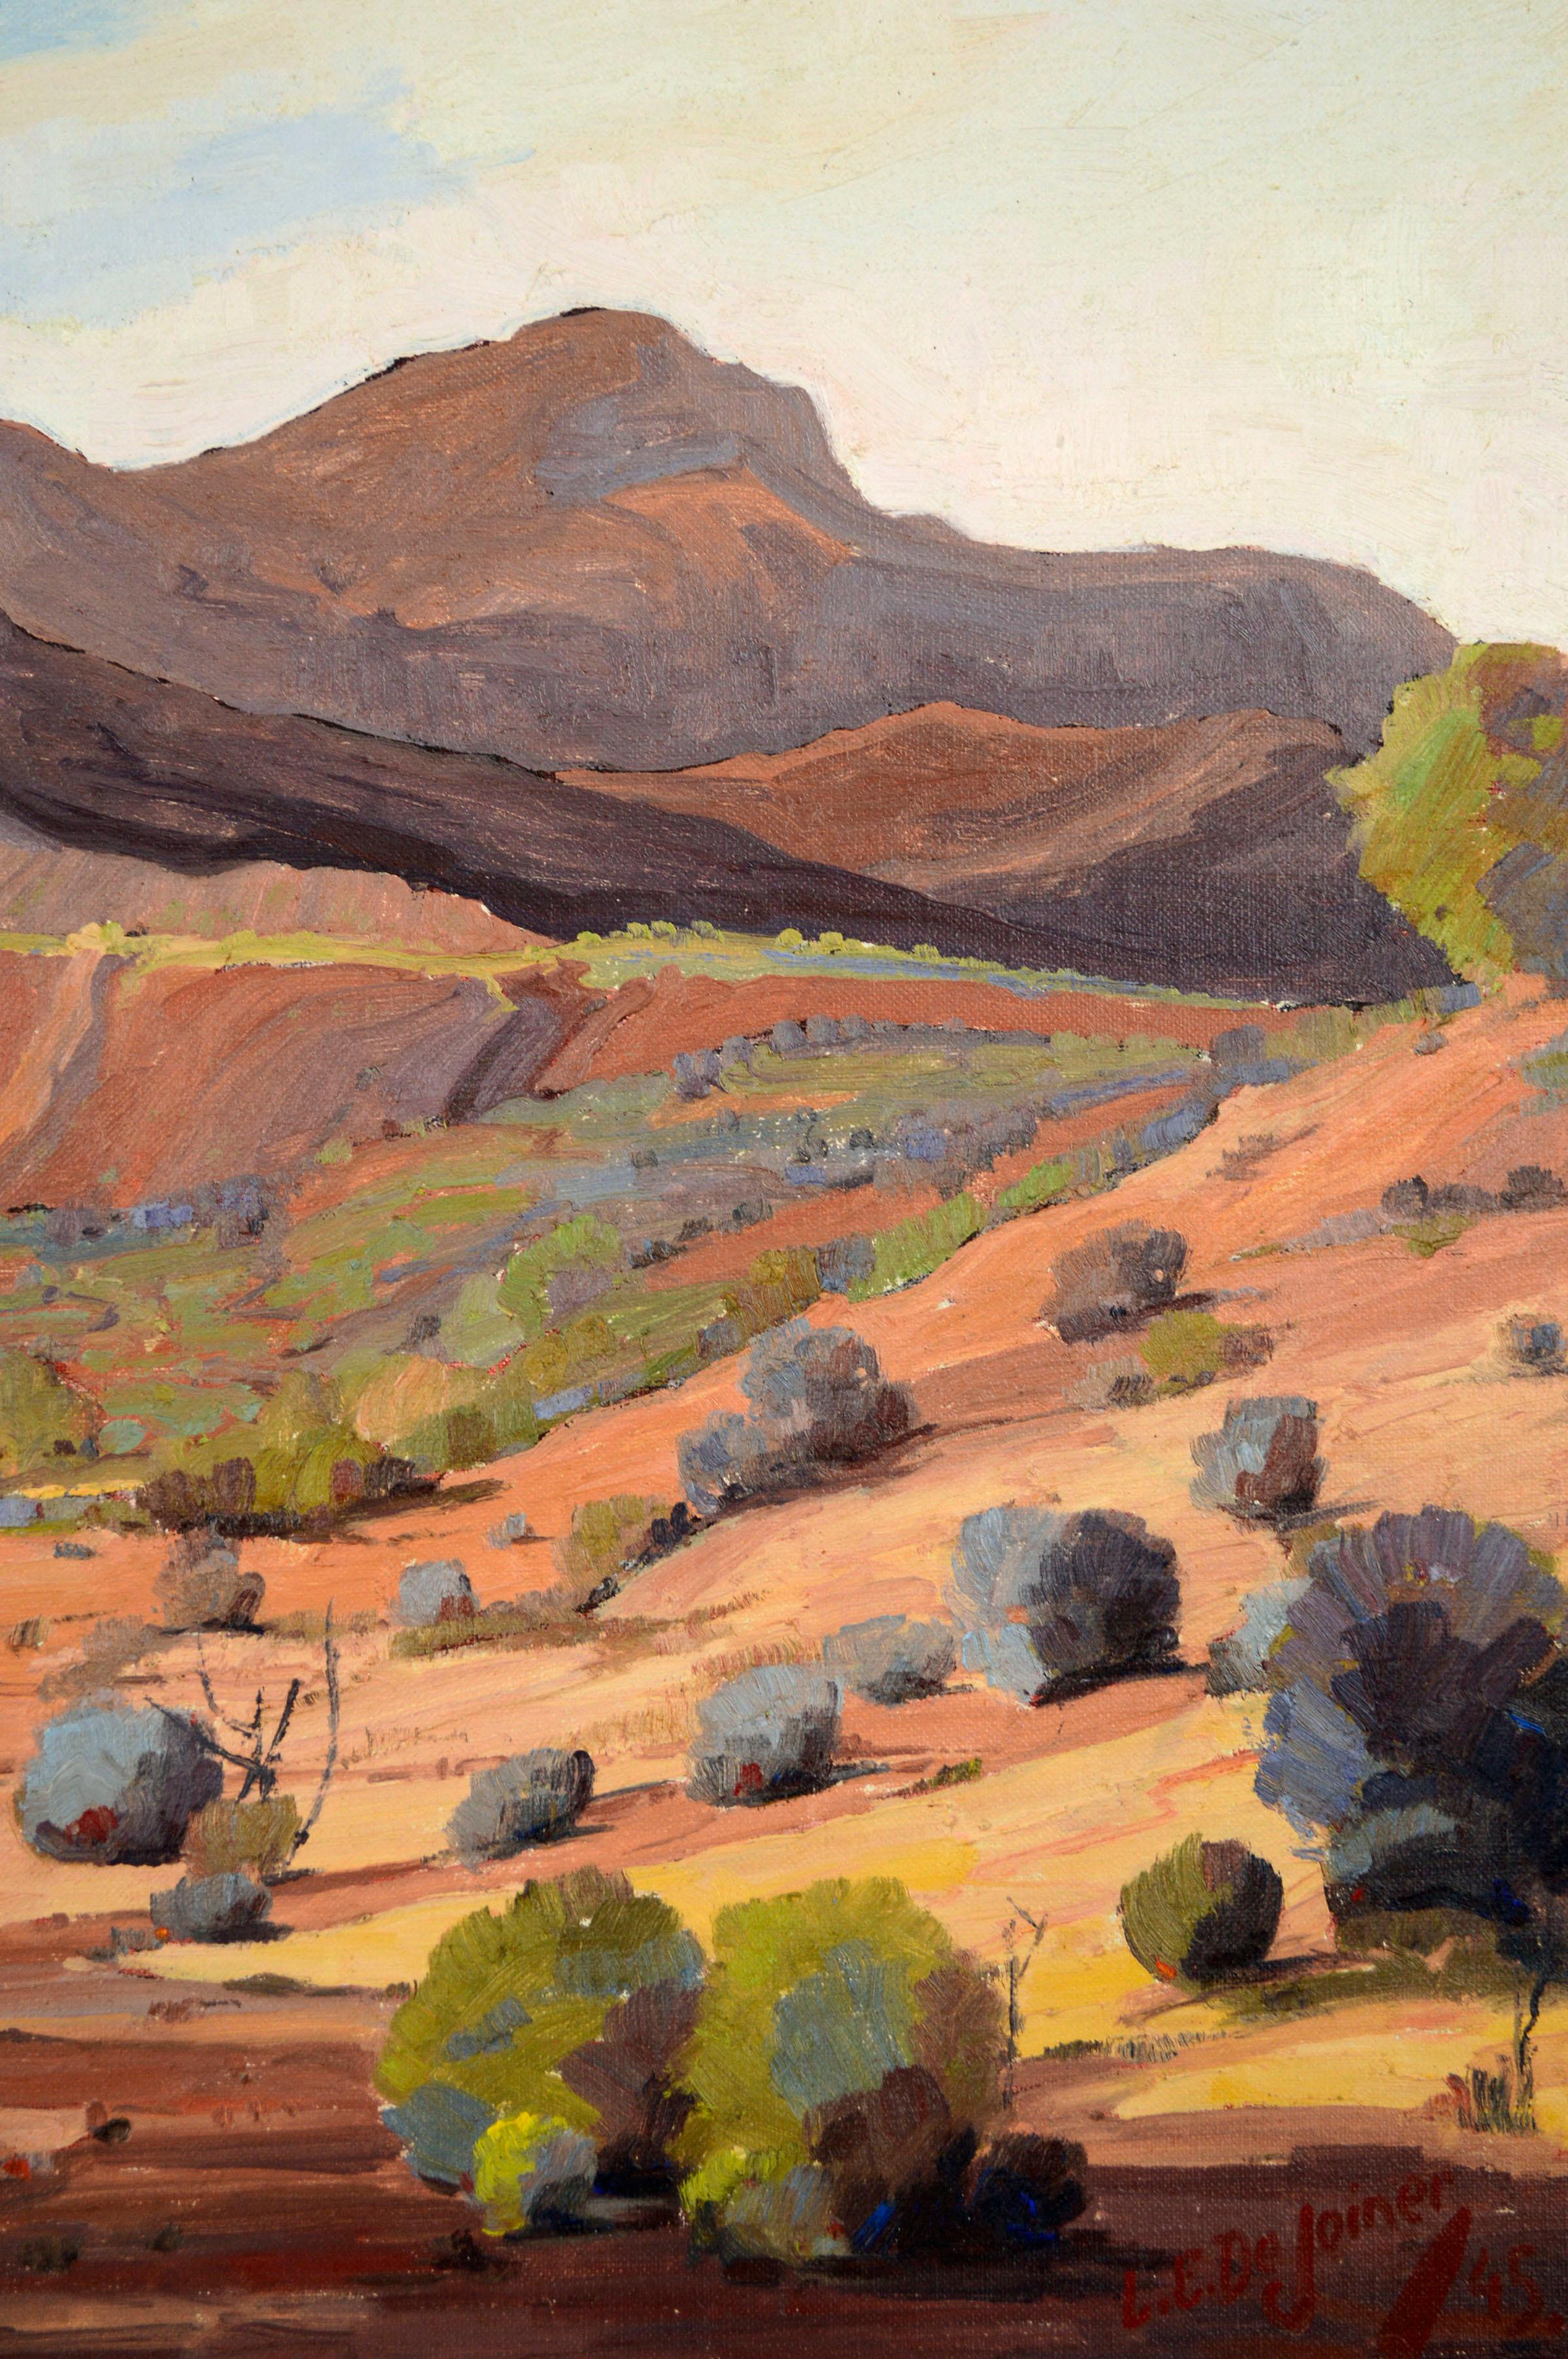 Picacho Peak, Arizona 1945 - Mid Century Southwest Desert Landscape by Dejoiner - Naturalistic Painting by Luther Evans Dejoiner